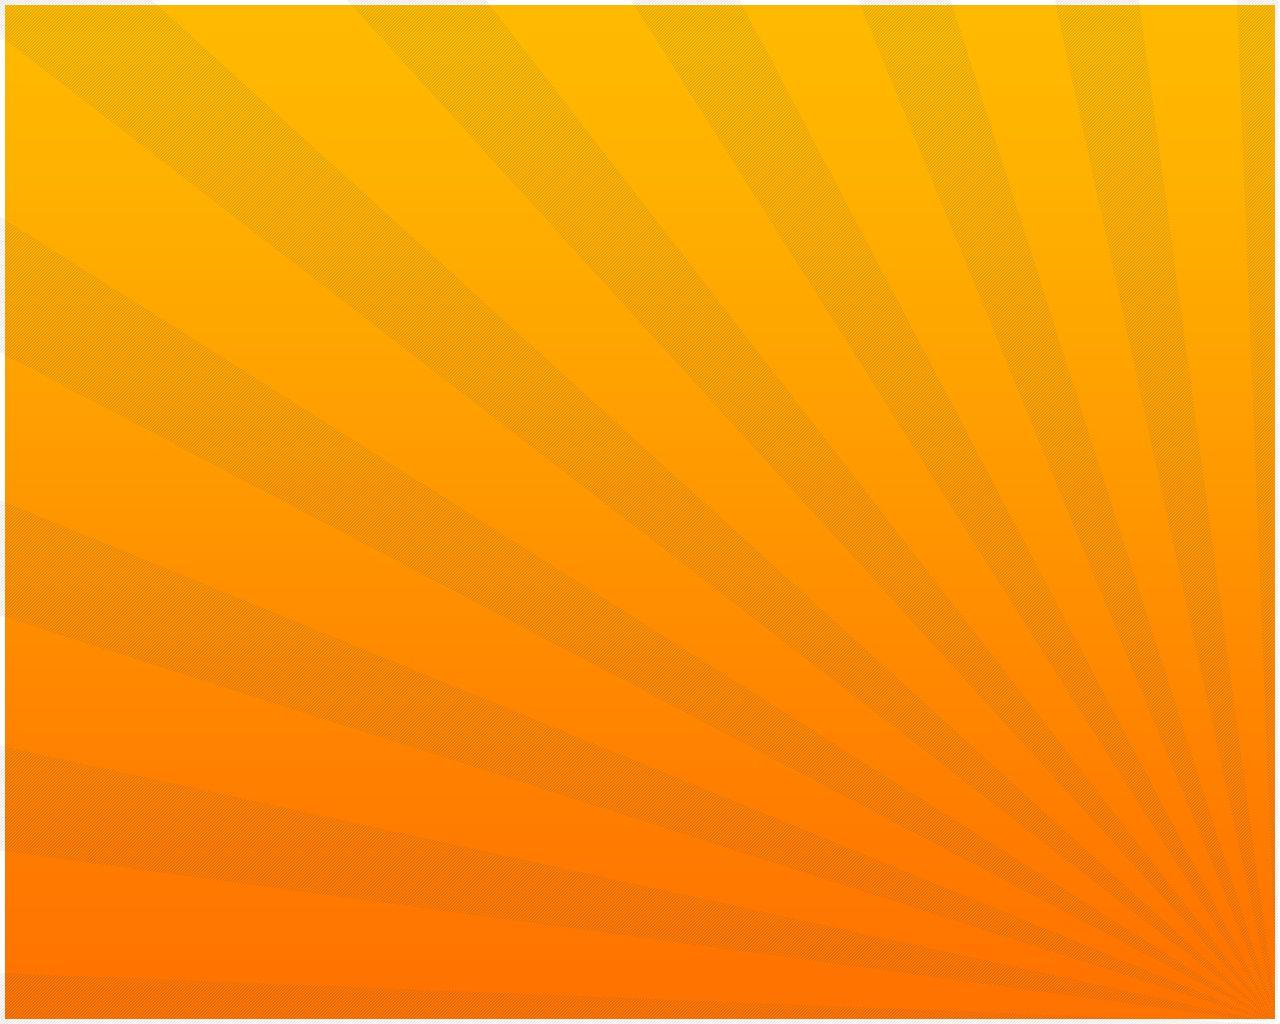 Download wallpaper: orange wallpaper, orange desktop wallpaper